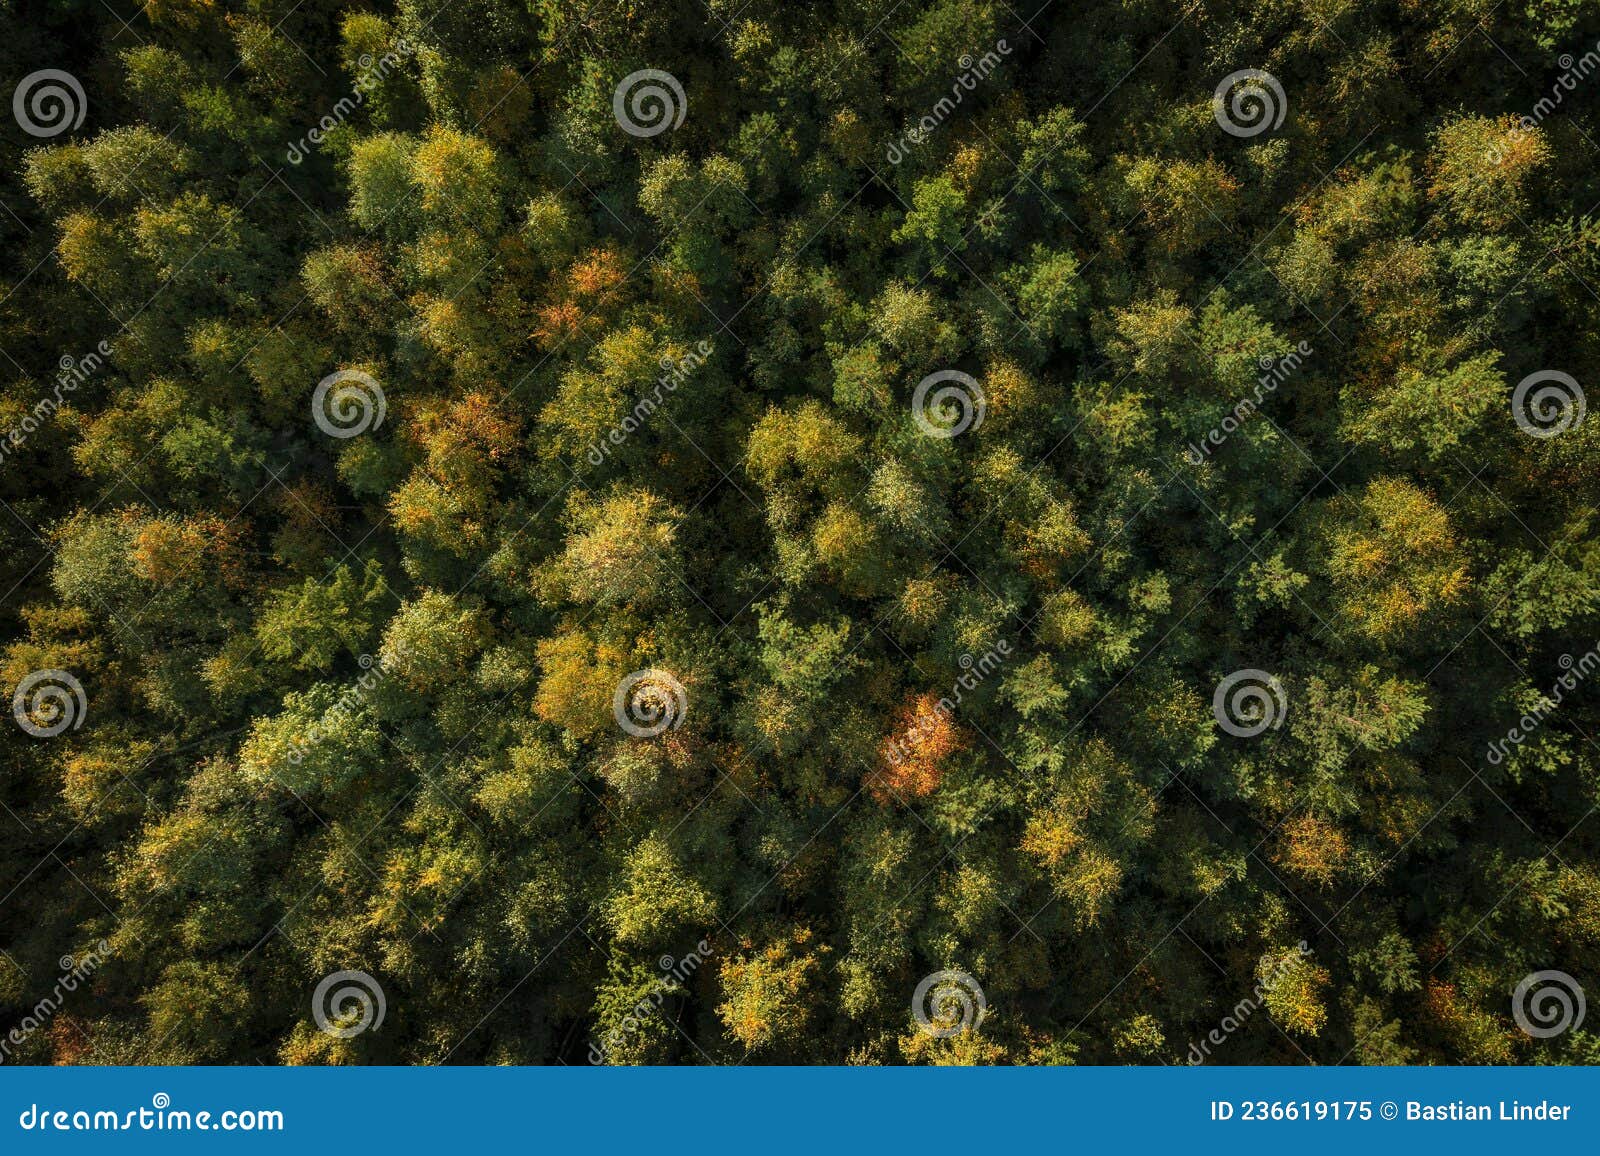 forest at lake siljan from above in dalarna, sweden